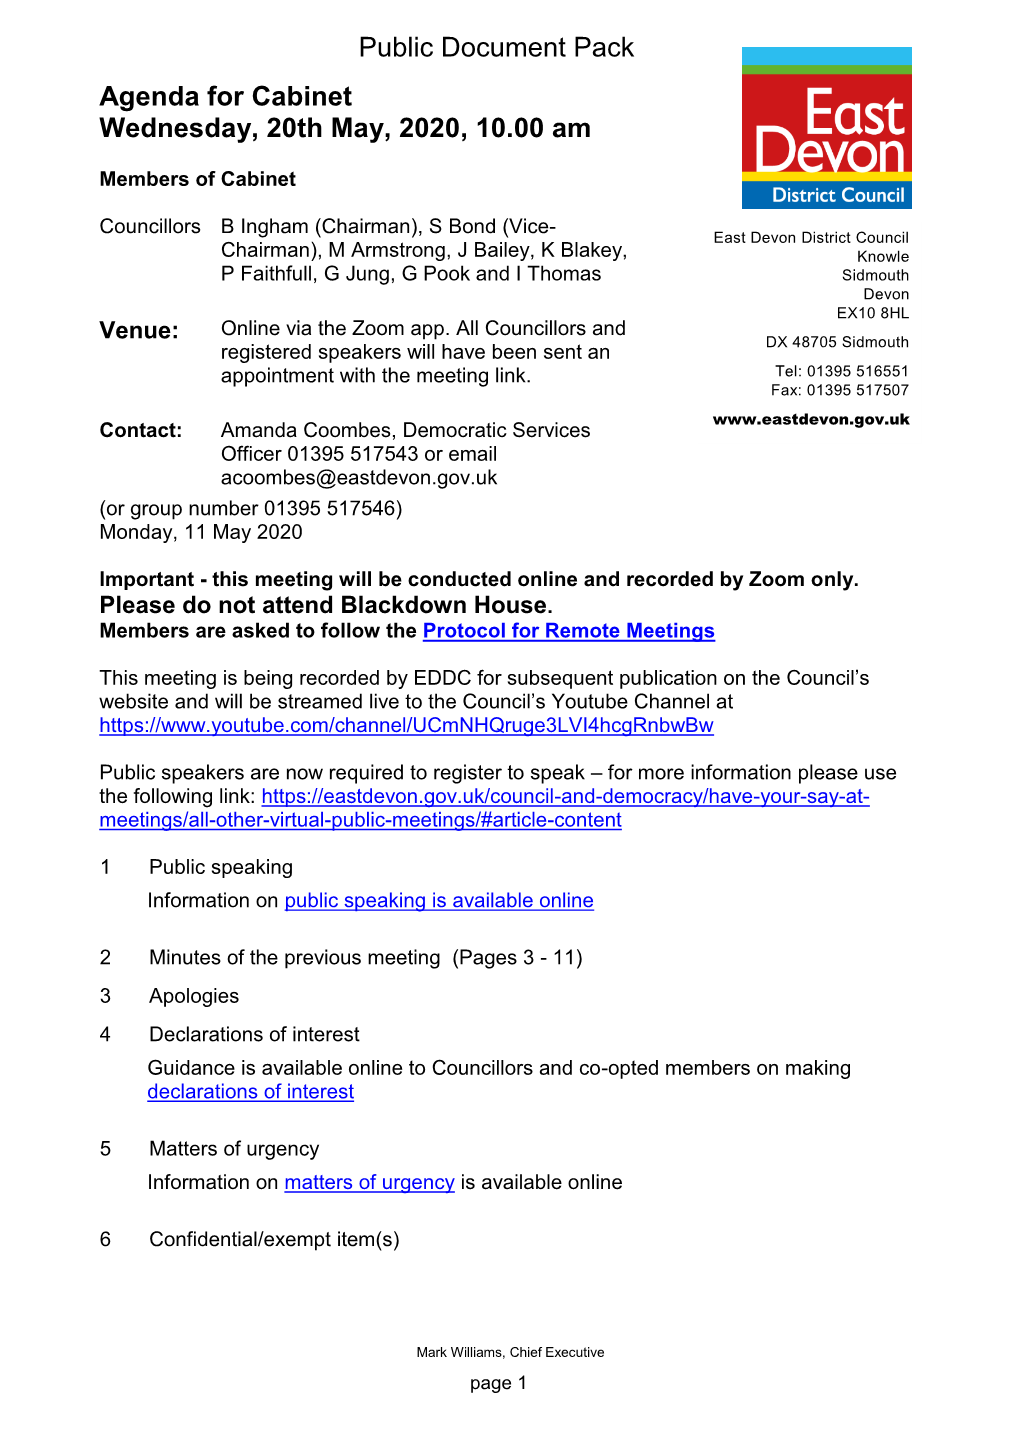 (Public Pack)Agenda Document for Cabinet, 20/05/2020 10:00